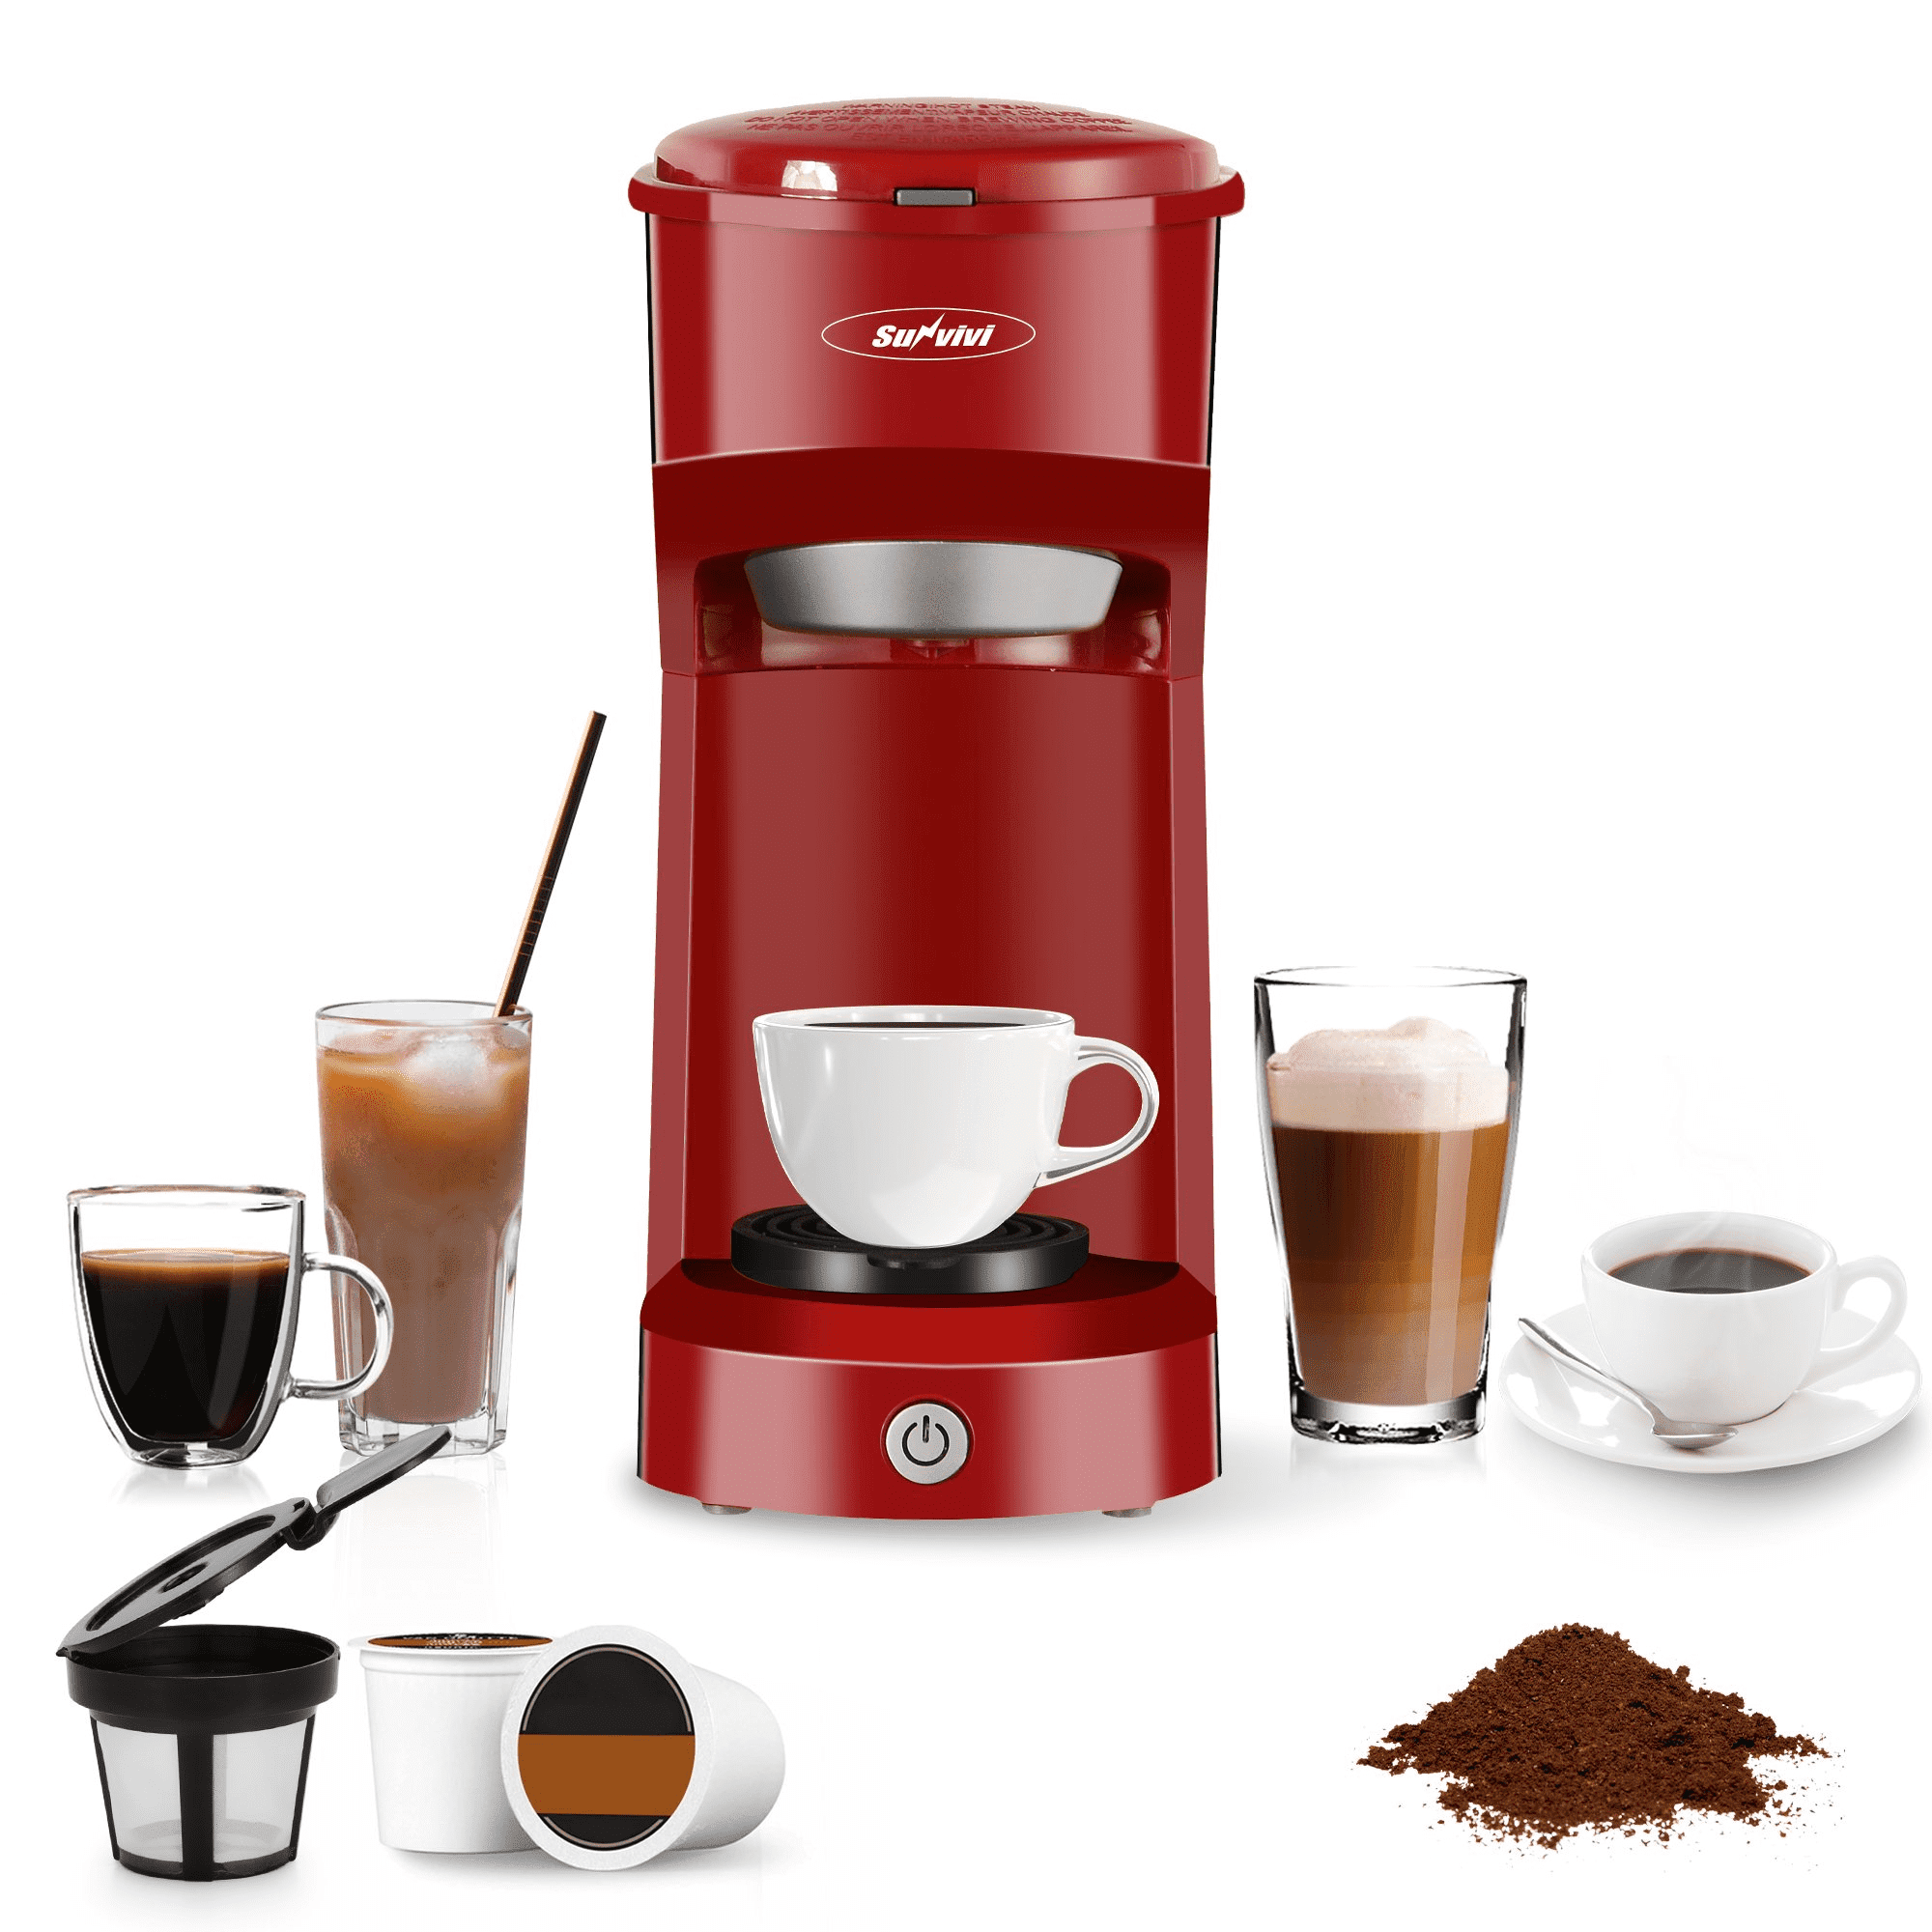 Review IKOHS POTTS Cafetera 3 en 1 compatible Nespresso, DolceGusto y café  express.☕ 